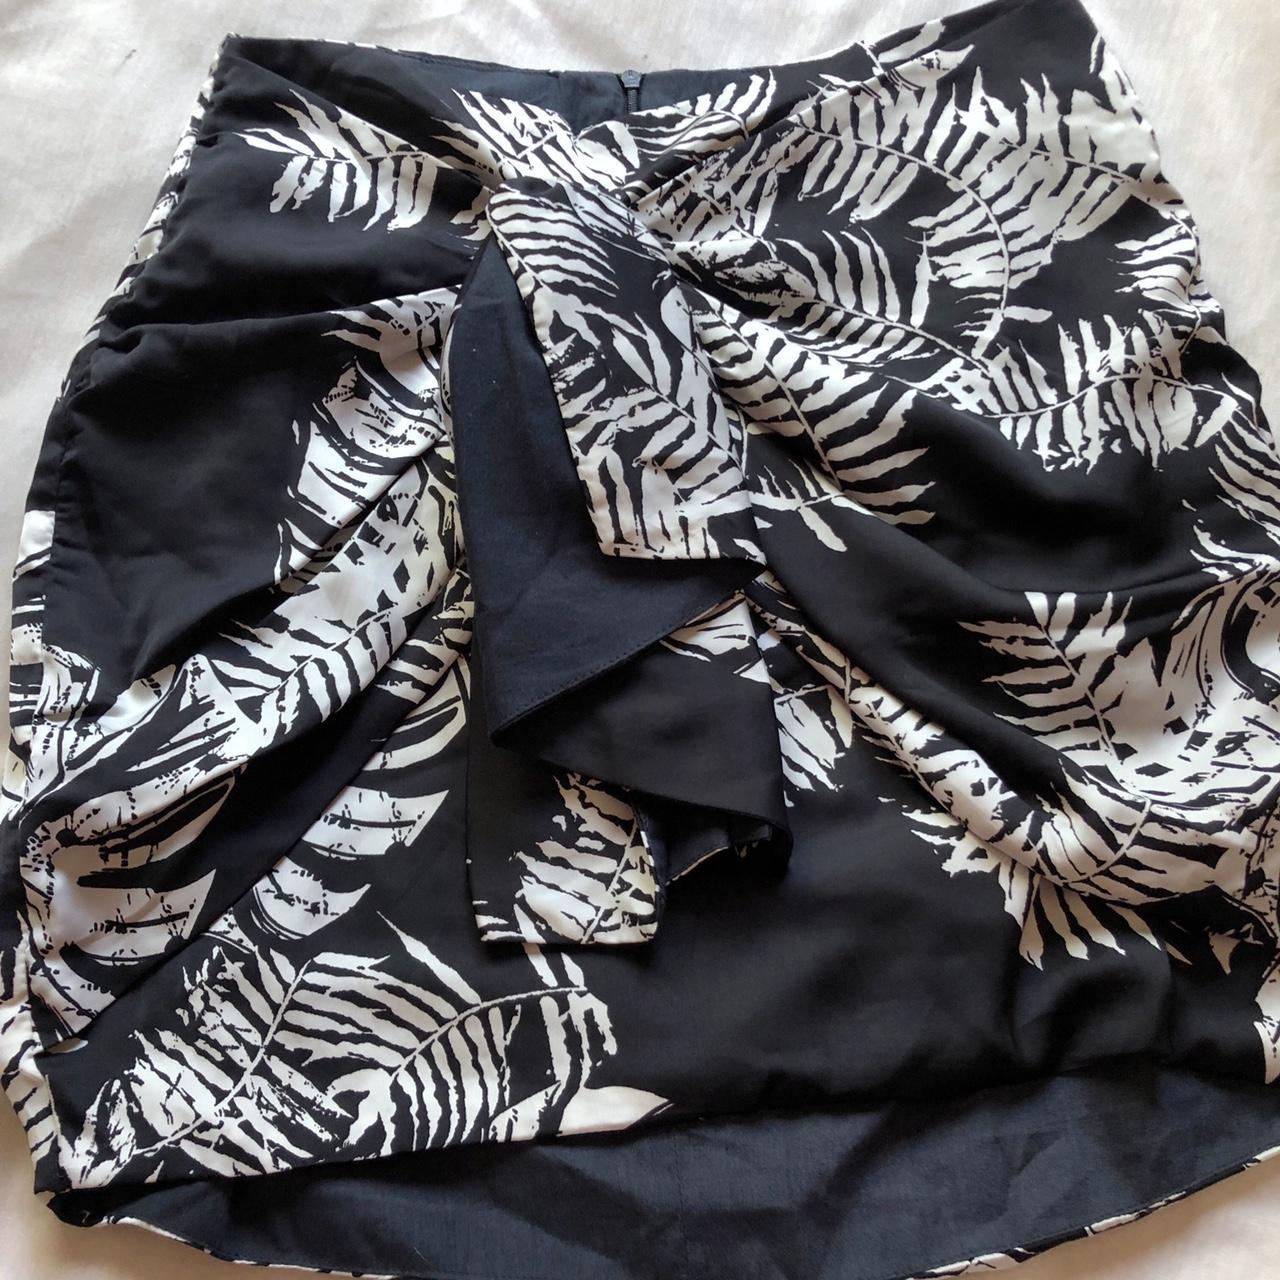 Zara Women's Black and White Skirt (2)